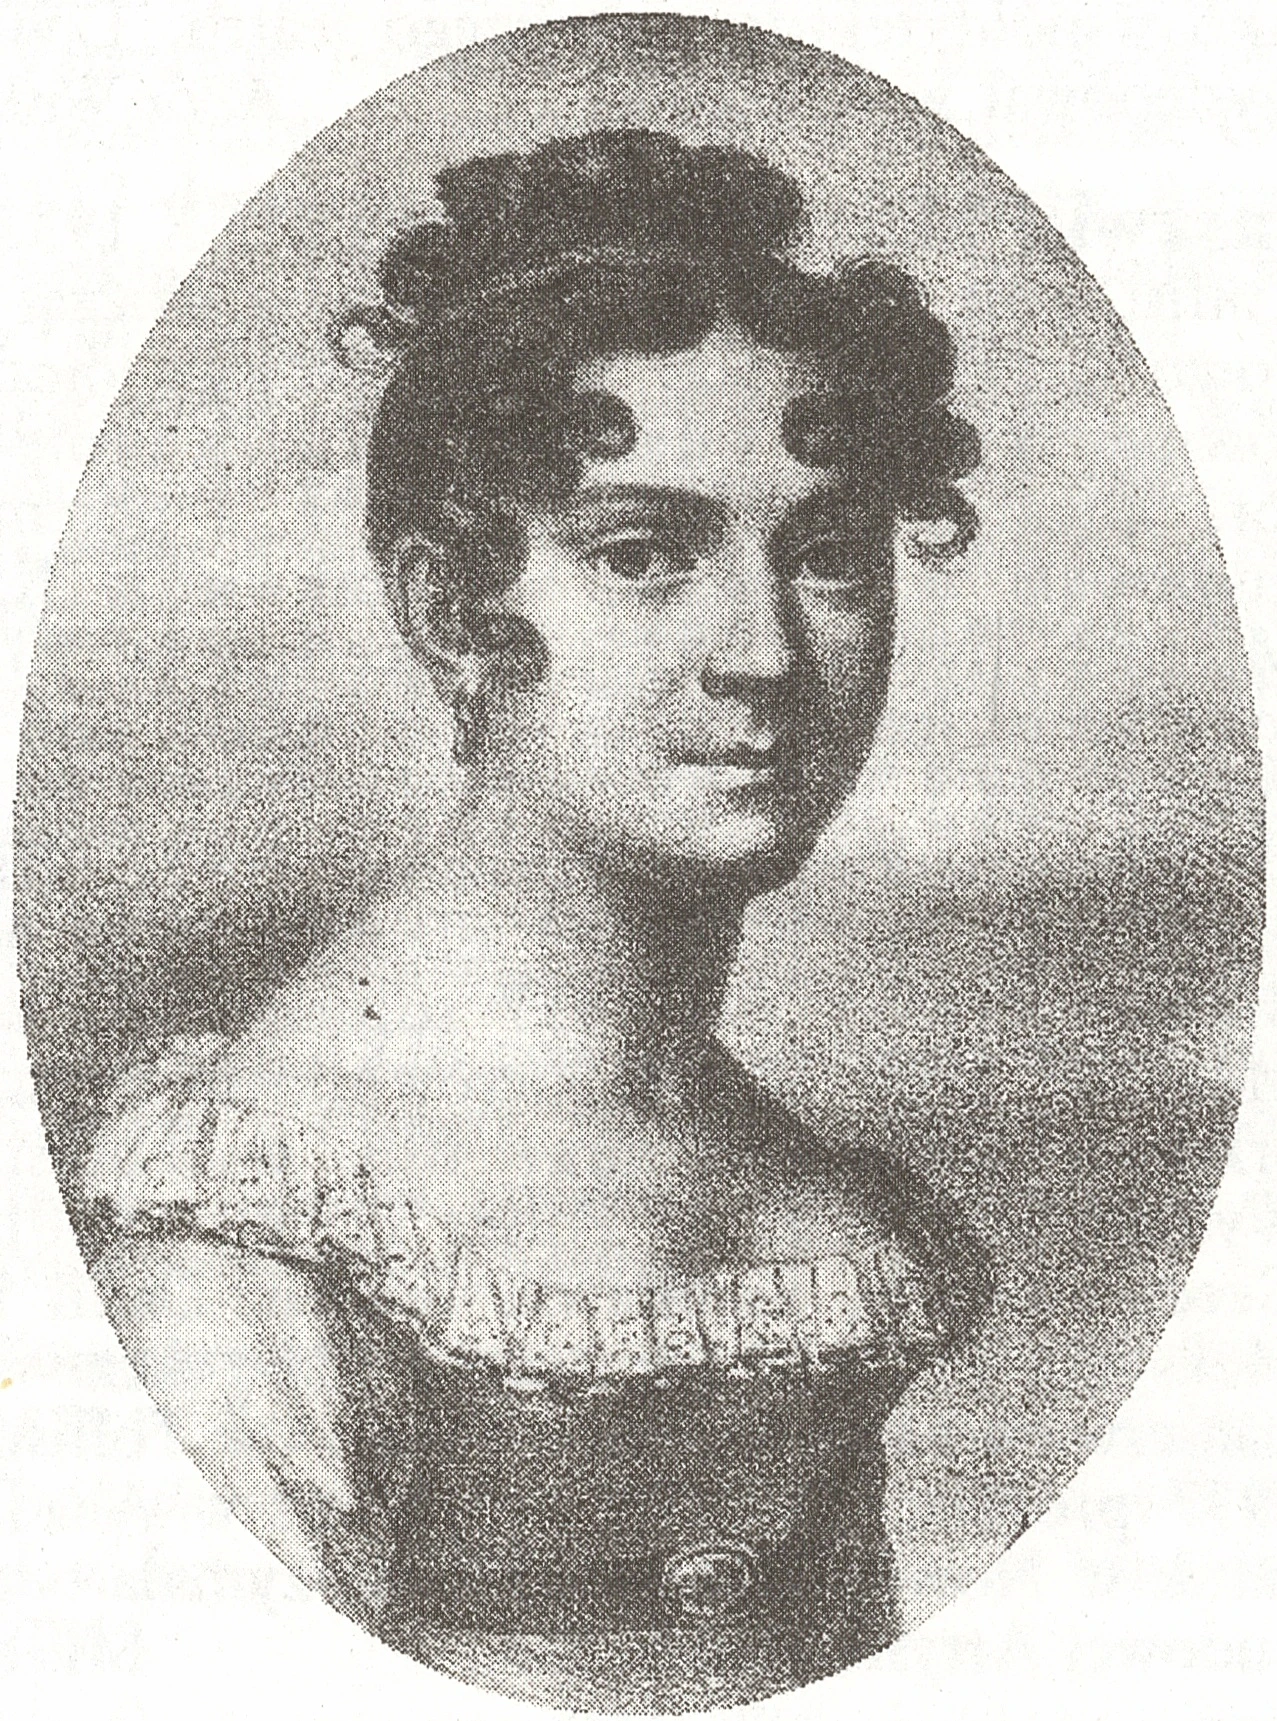 Jasińska, Magdalena (EN)